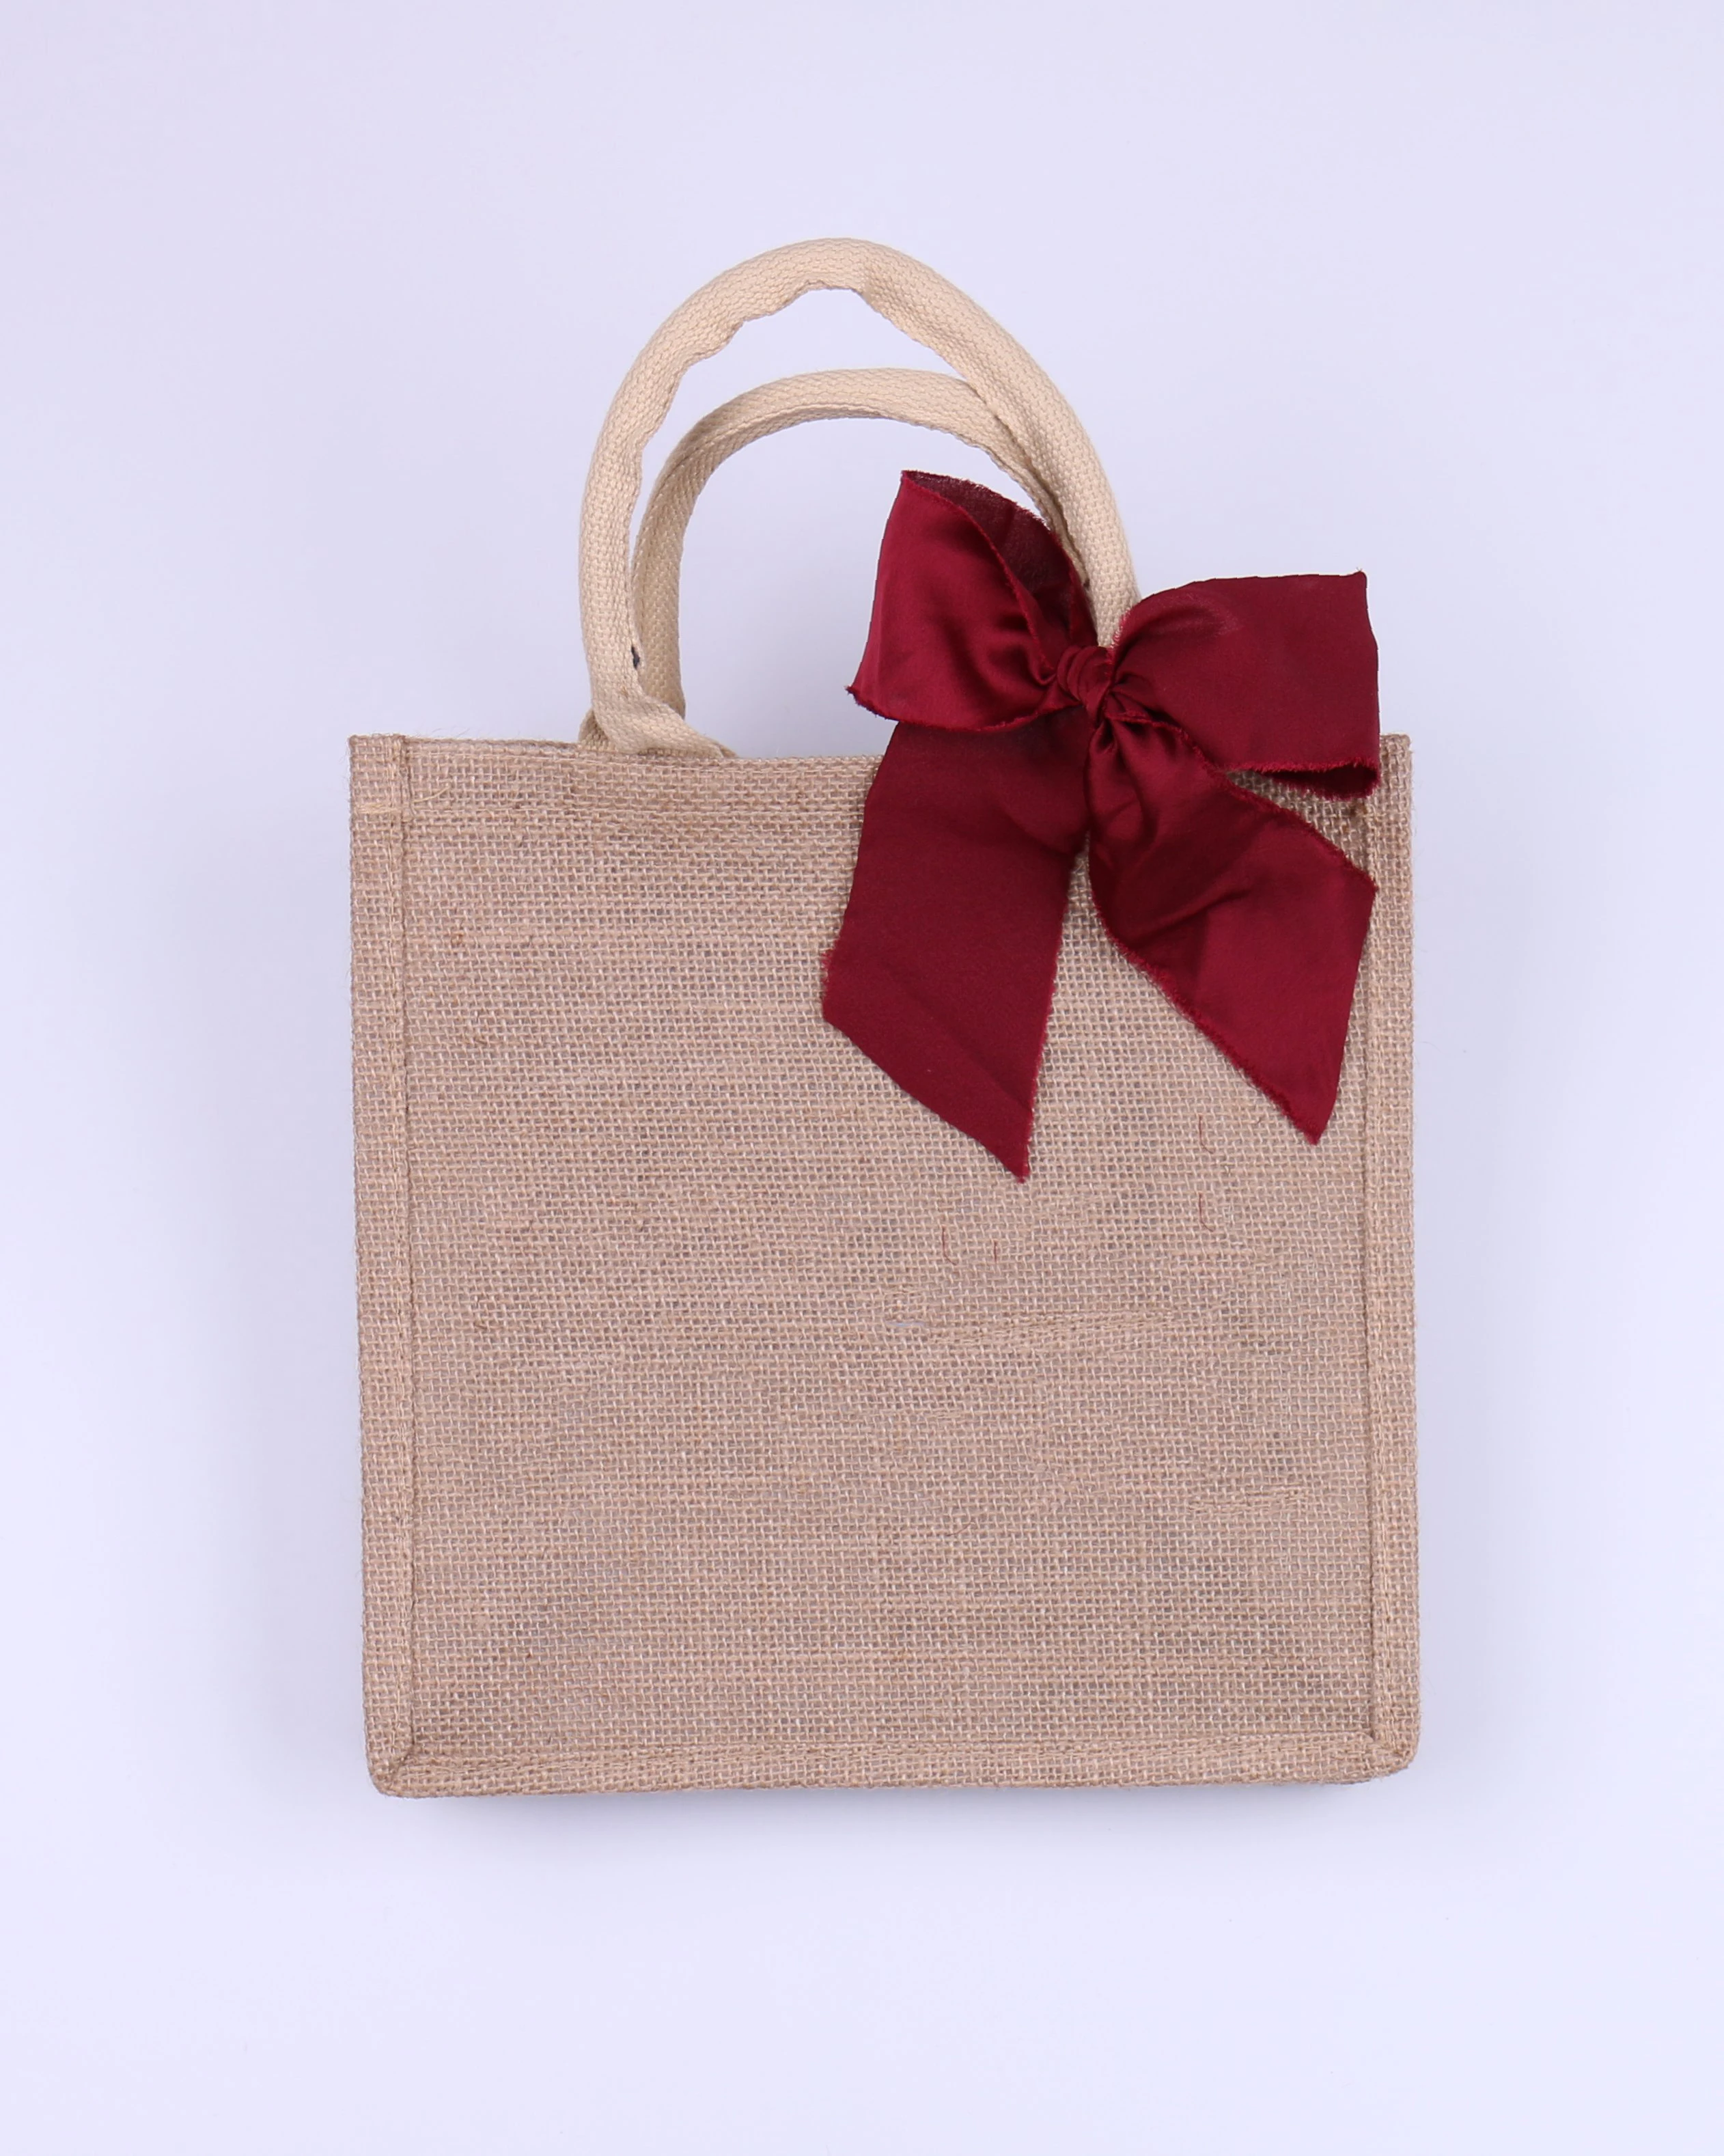 Personalized Wedding Gift bag - Buy Jute bridesmaid bags, Wedding